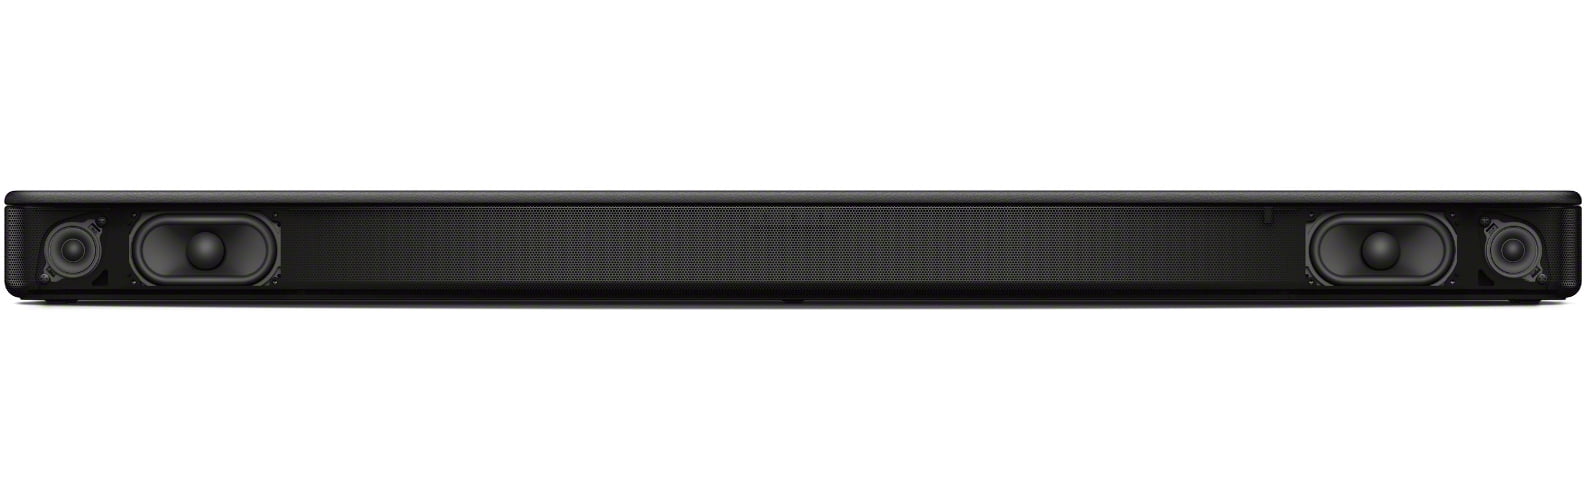 Sony HT-S100F 2.0 Channel Soundbar with Soundbar Bracket and 6ft HDMI cable